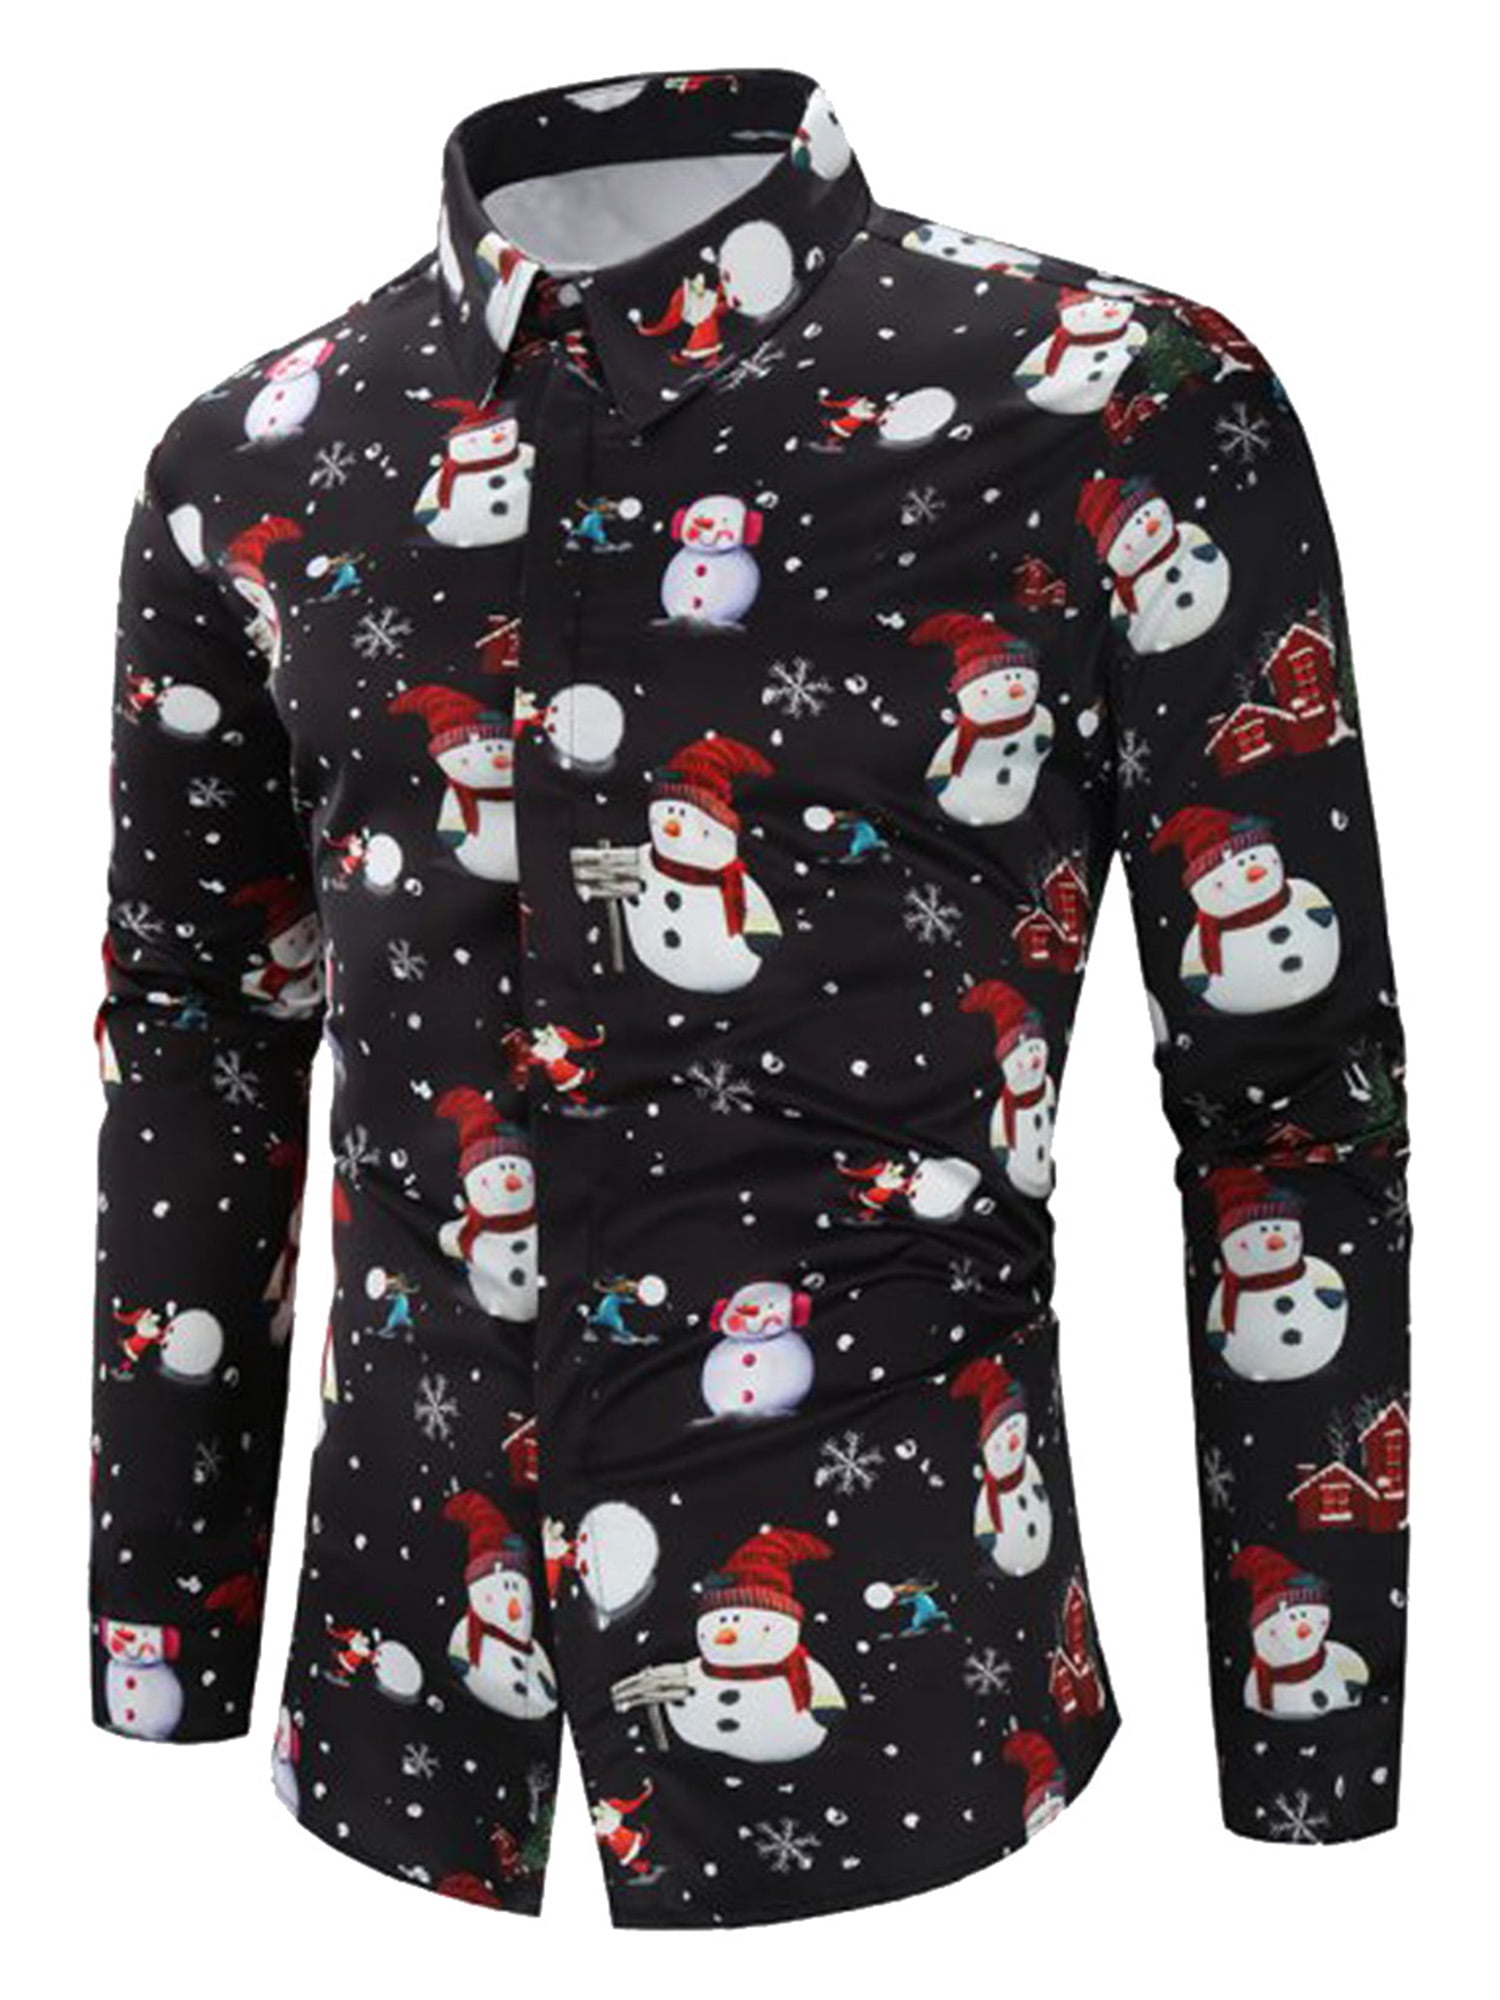 JOGAL Mens Fun Christmas Print Santa Claus Shirts Long Sleeve Button Up Dress Shirts